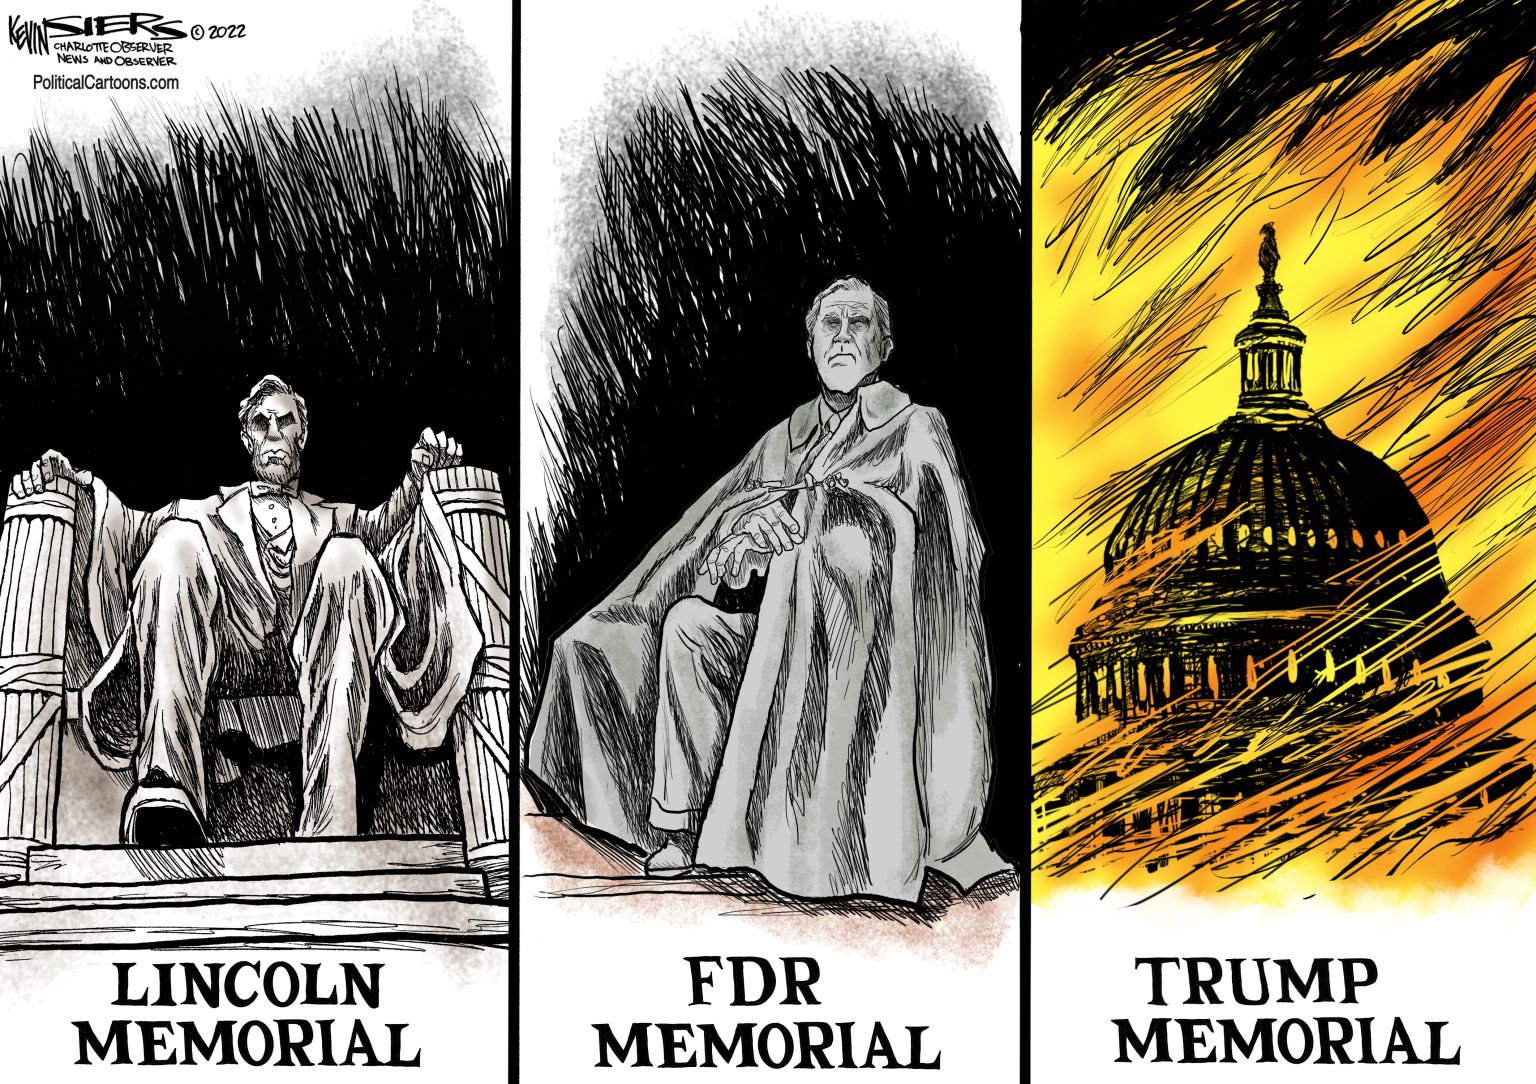 Trump Memorial - newsjustin.press - editorial cartoon